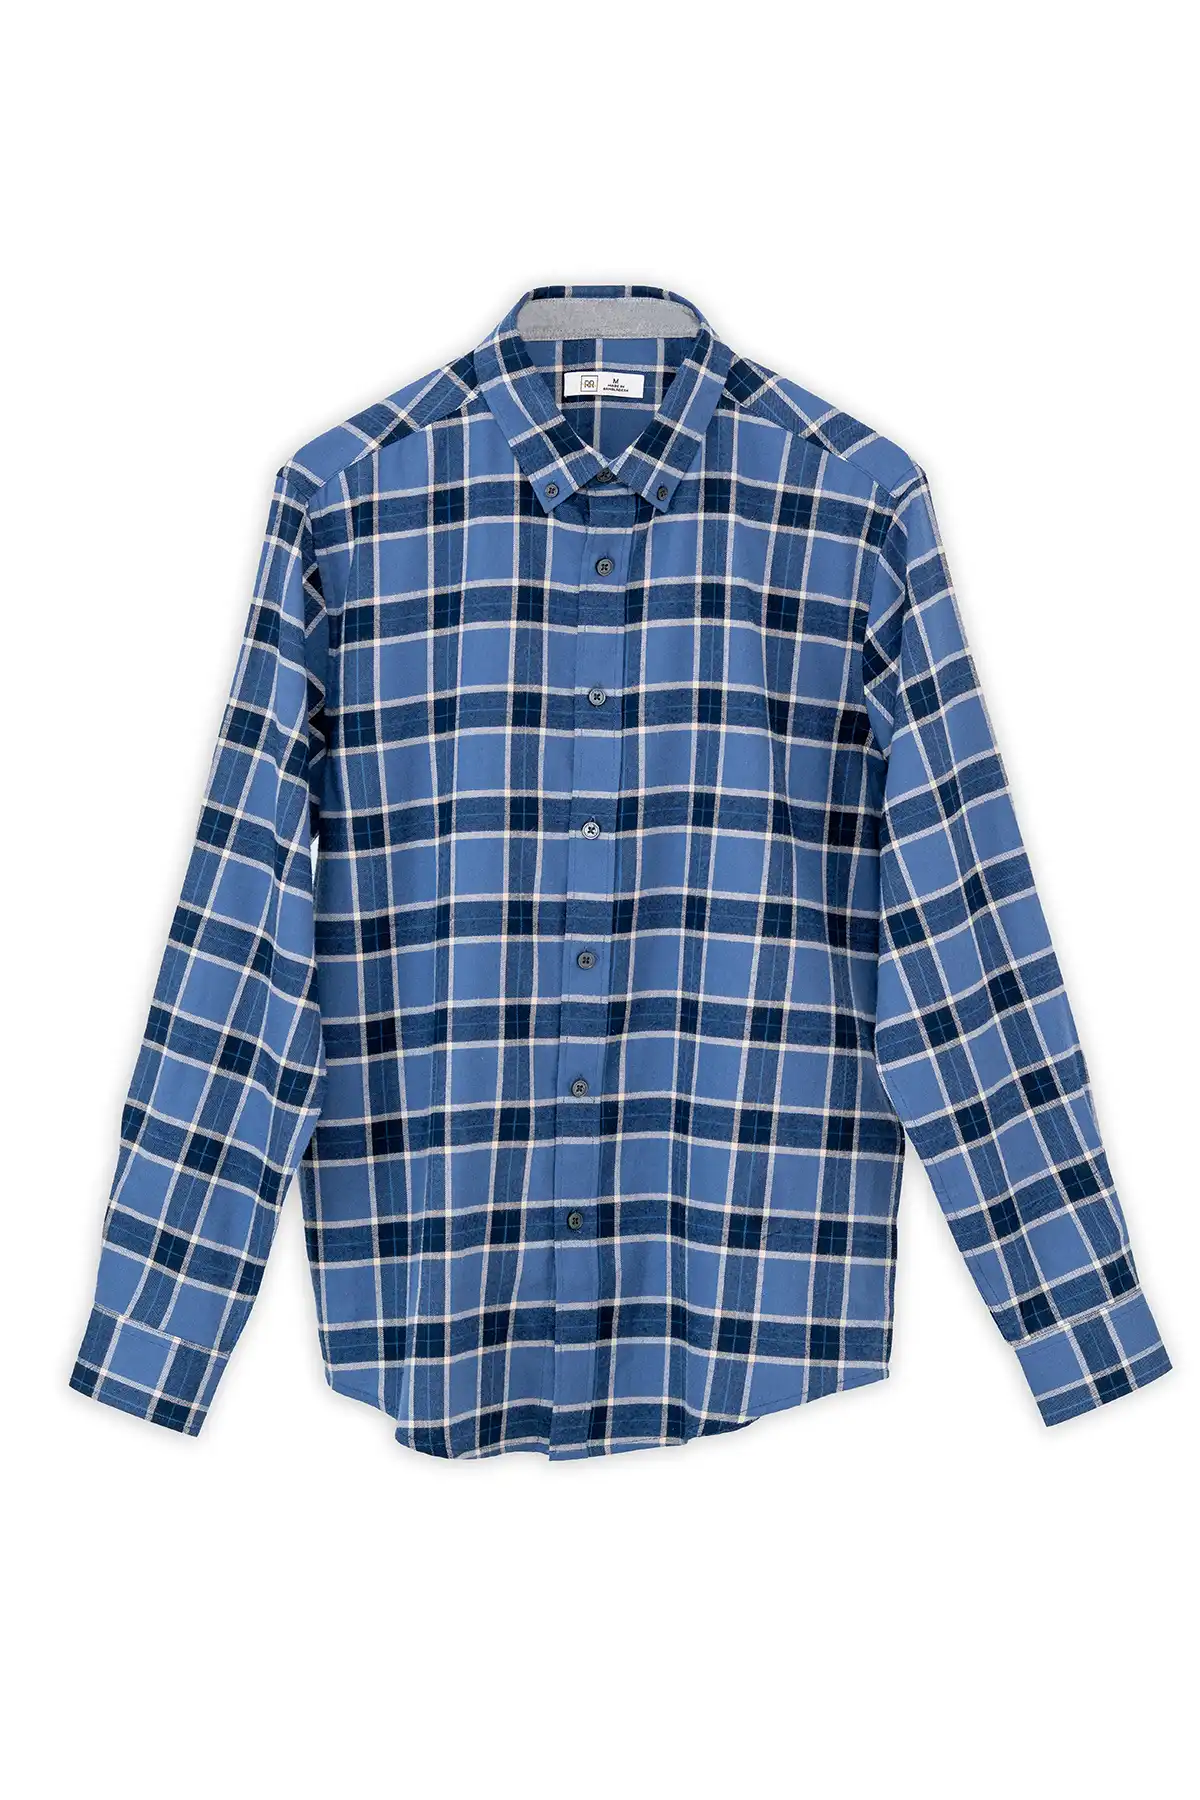 Checked Flannel Shirt - Multi-Colored Check